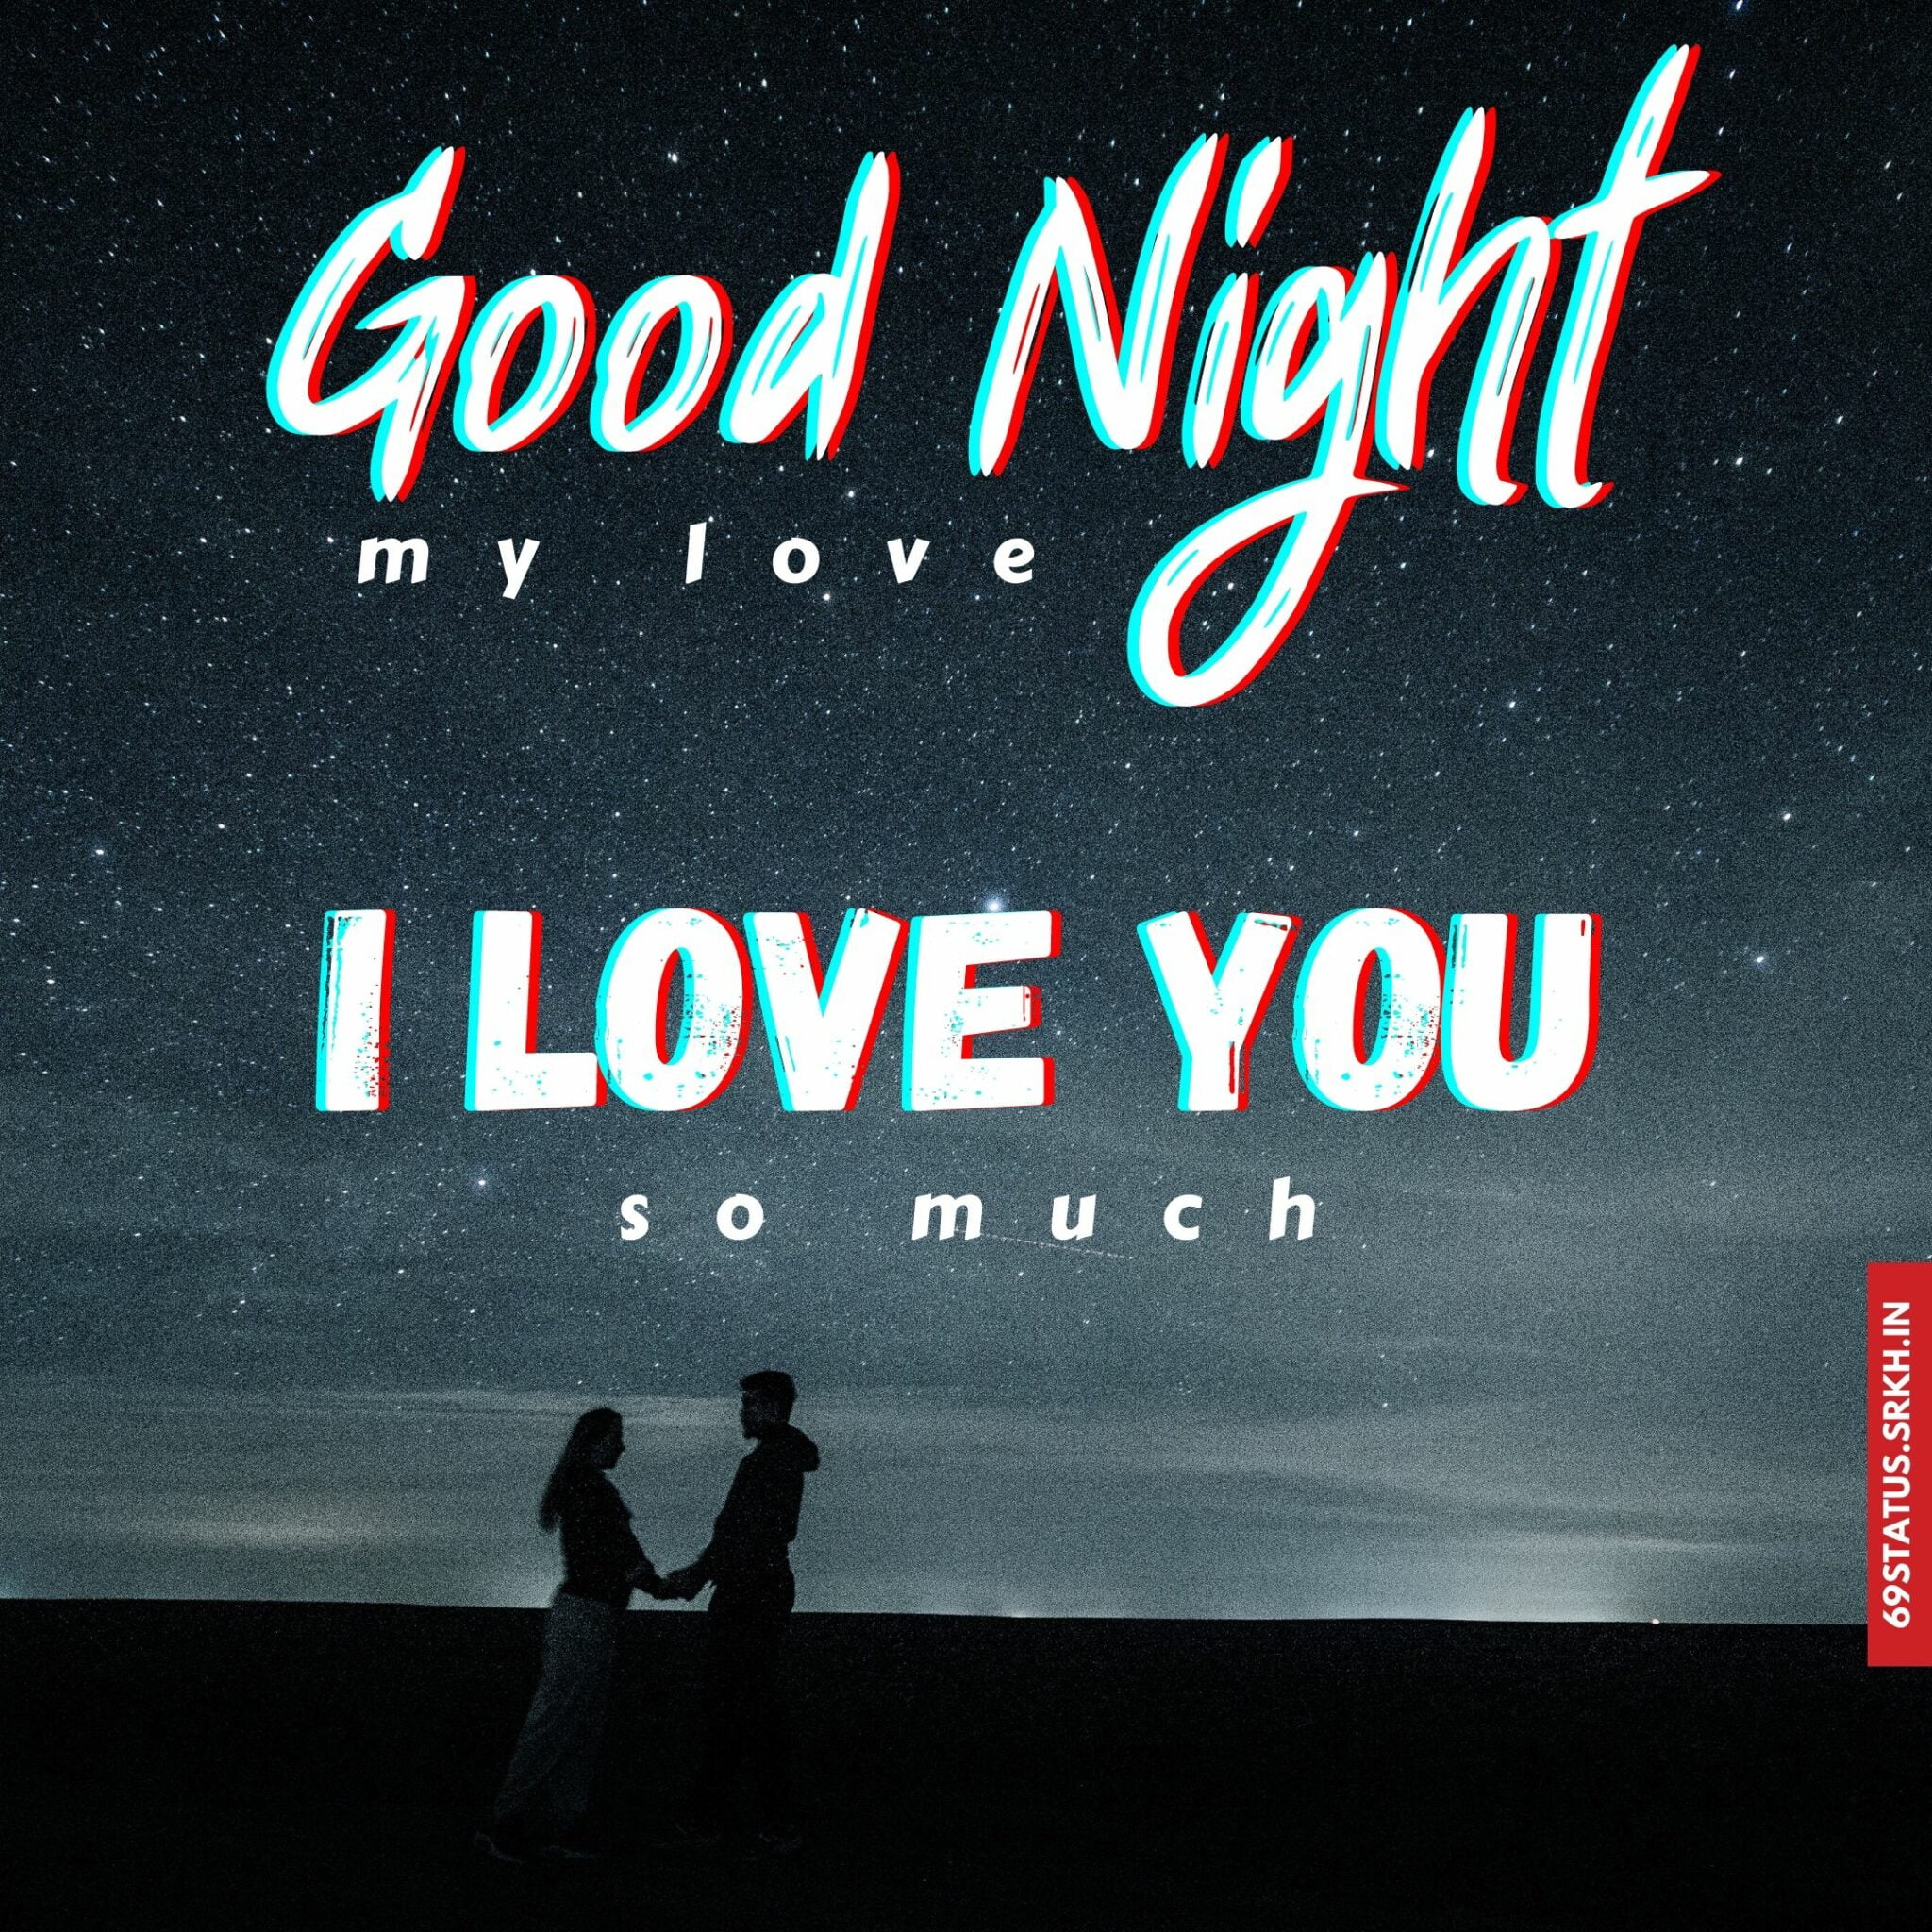 🔥 Good night I Love You images hd Download free - Images SRkh